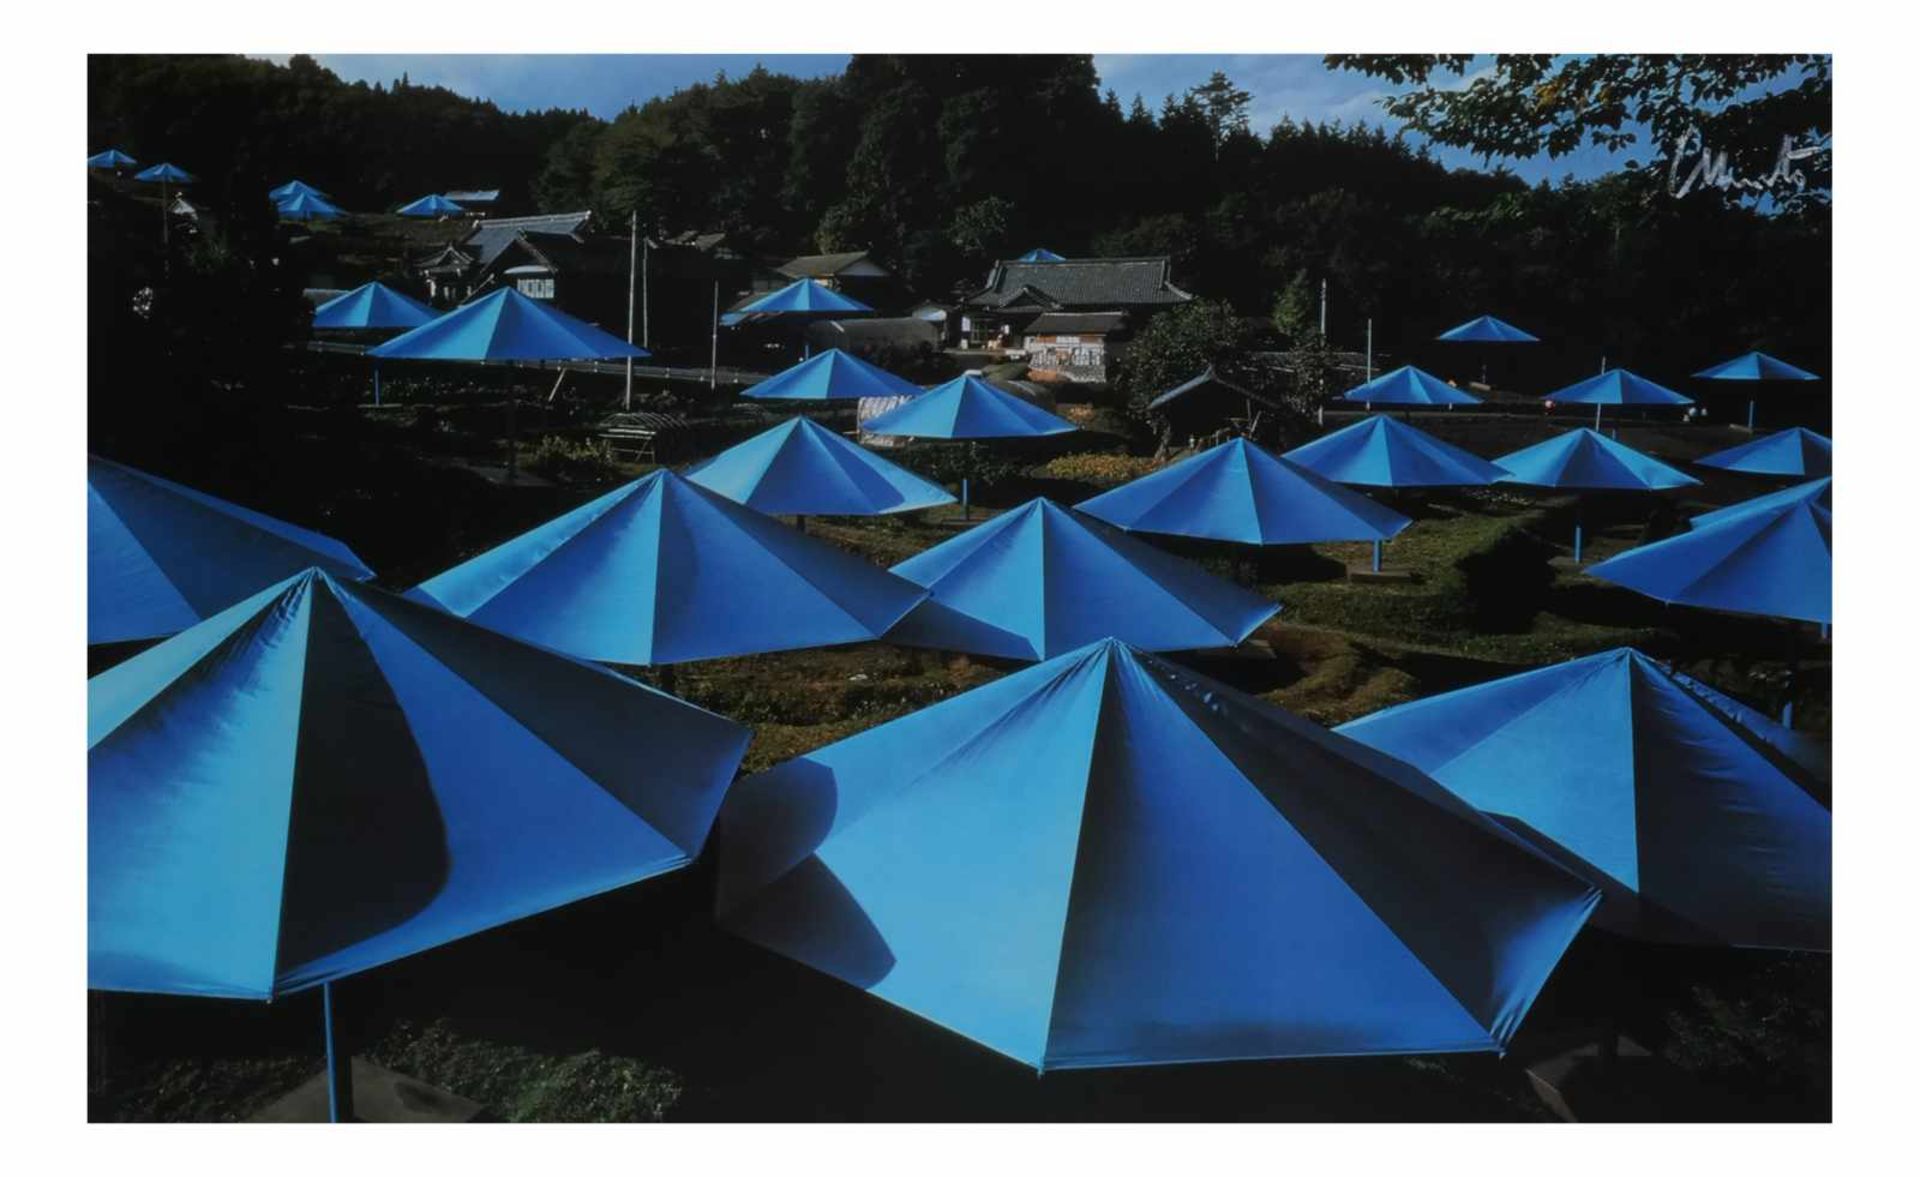 Christo & Jeanne-Claude - The Umbrellas, Ibaraki, Japan